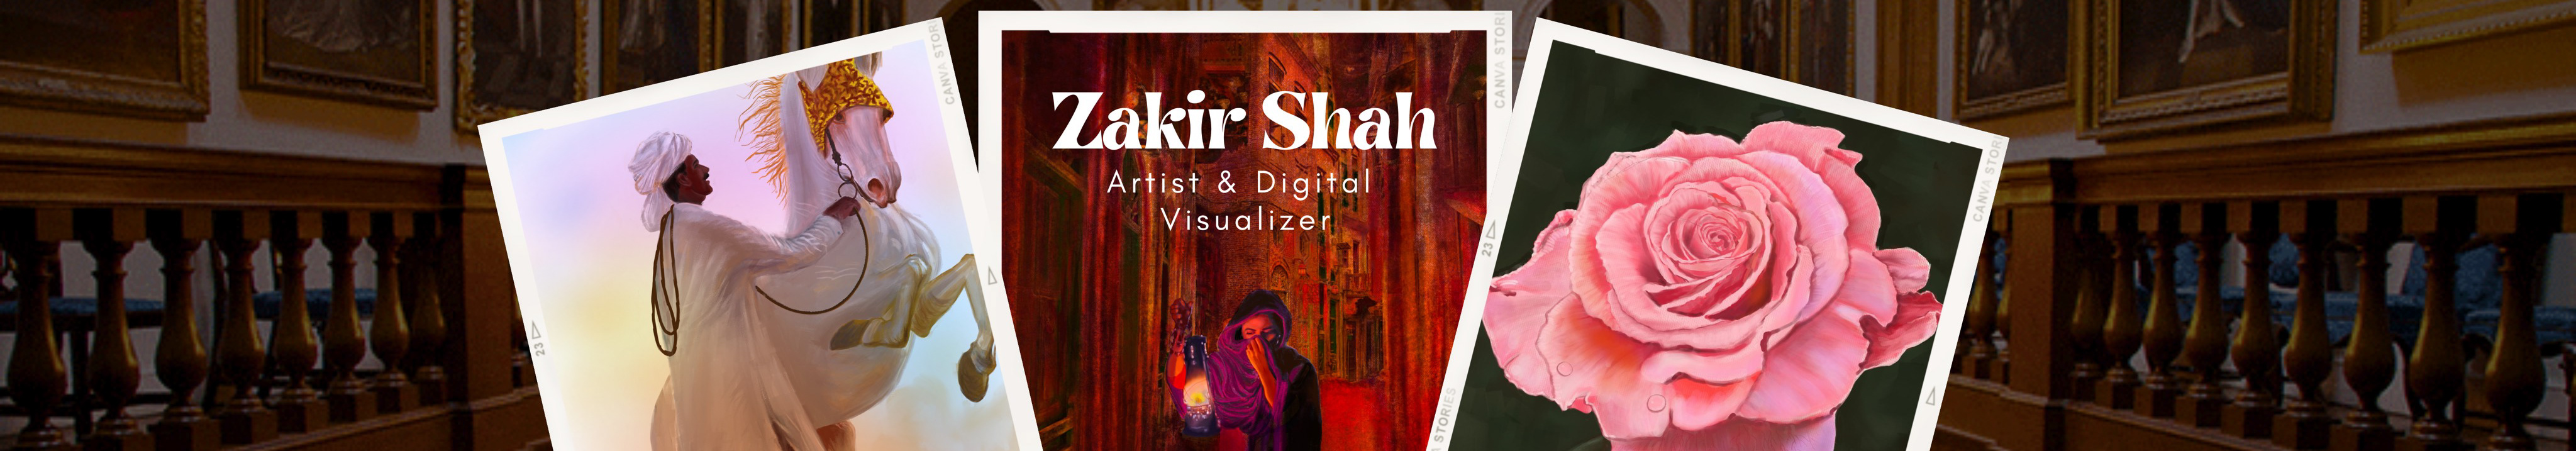 Zakir Shah's profile banner